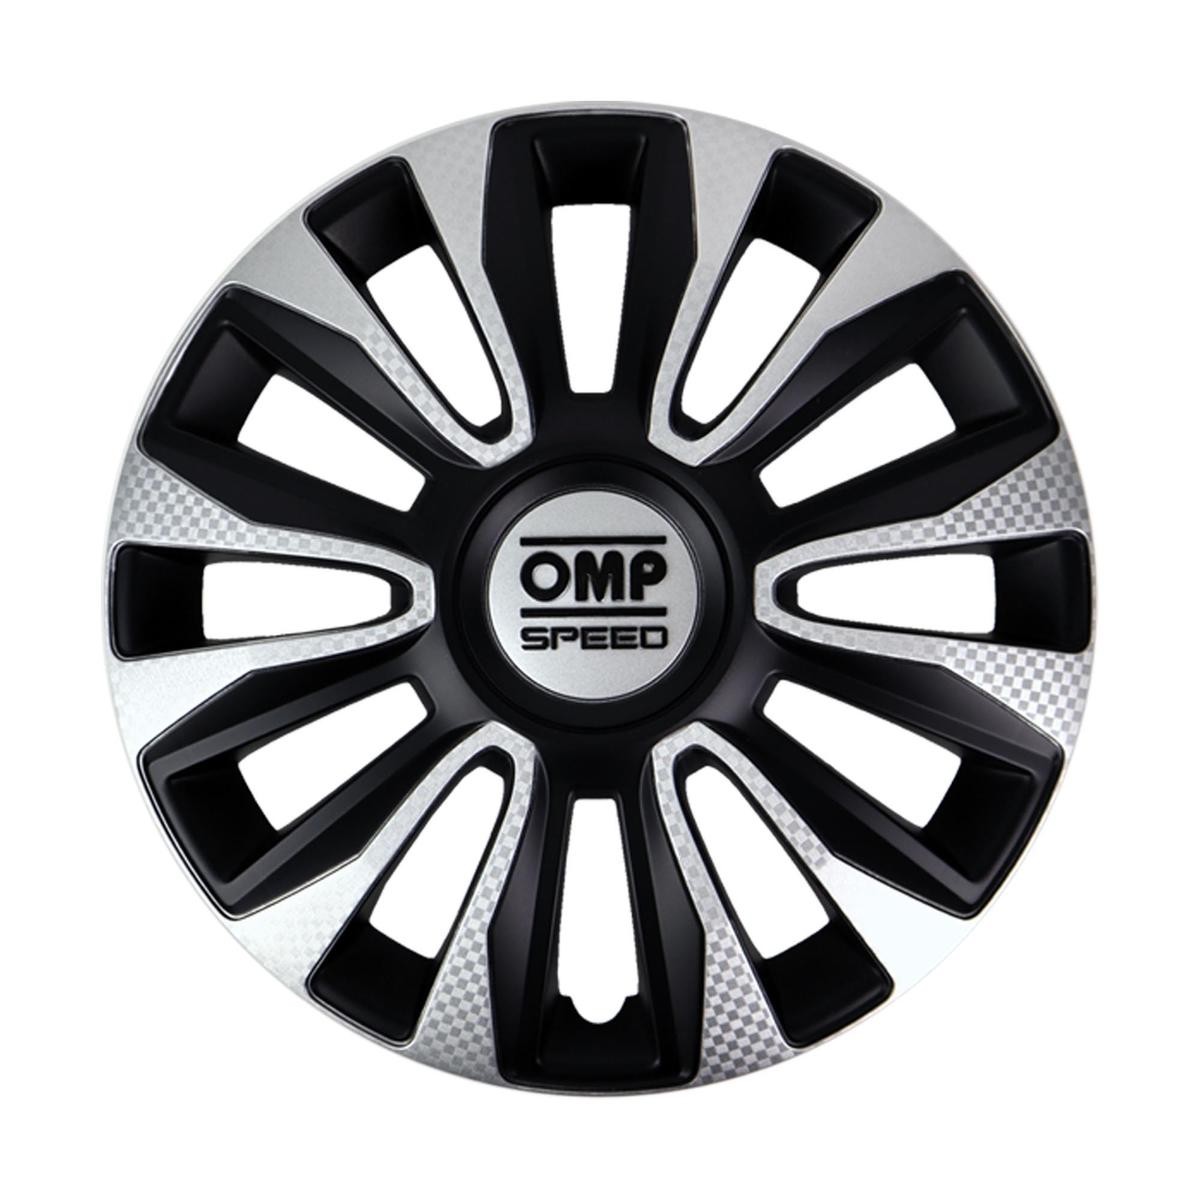 OMP OMPS07011422 Car wheel trims BMW 3 Touring (E91) 14 Inch black/silver, Carbon